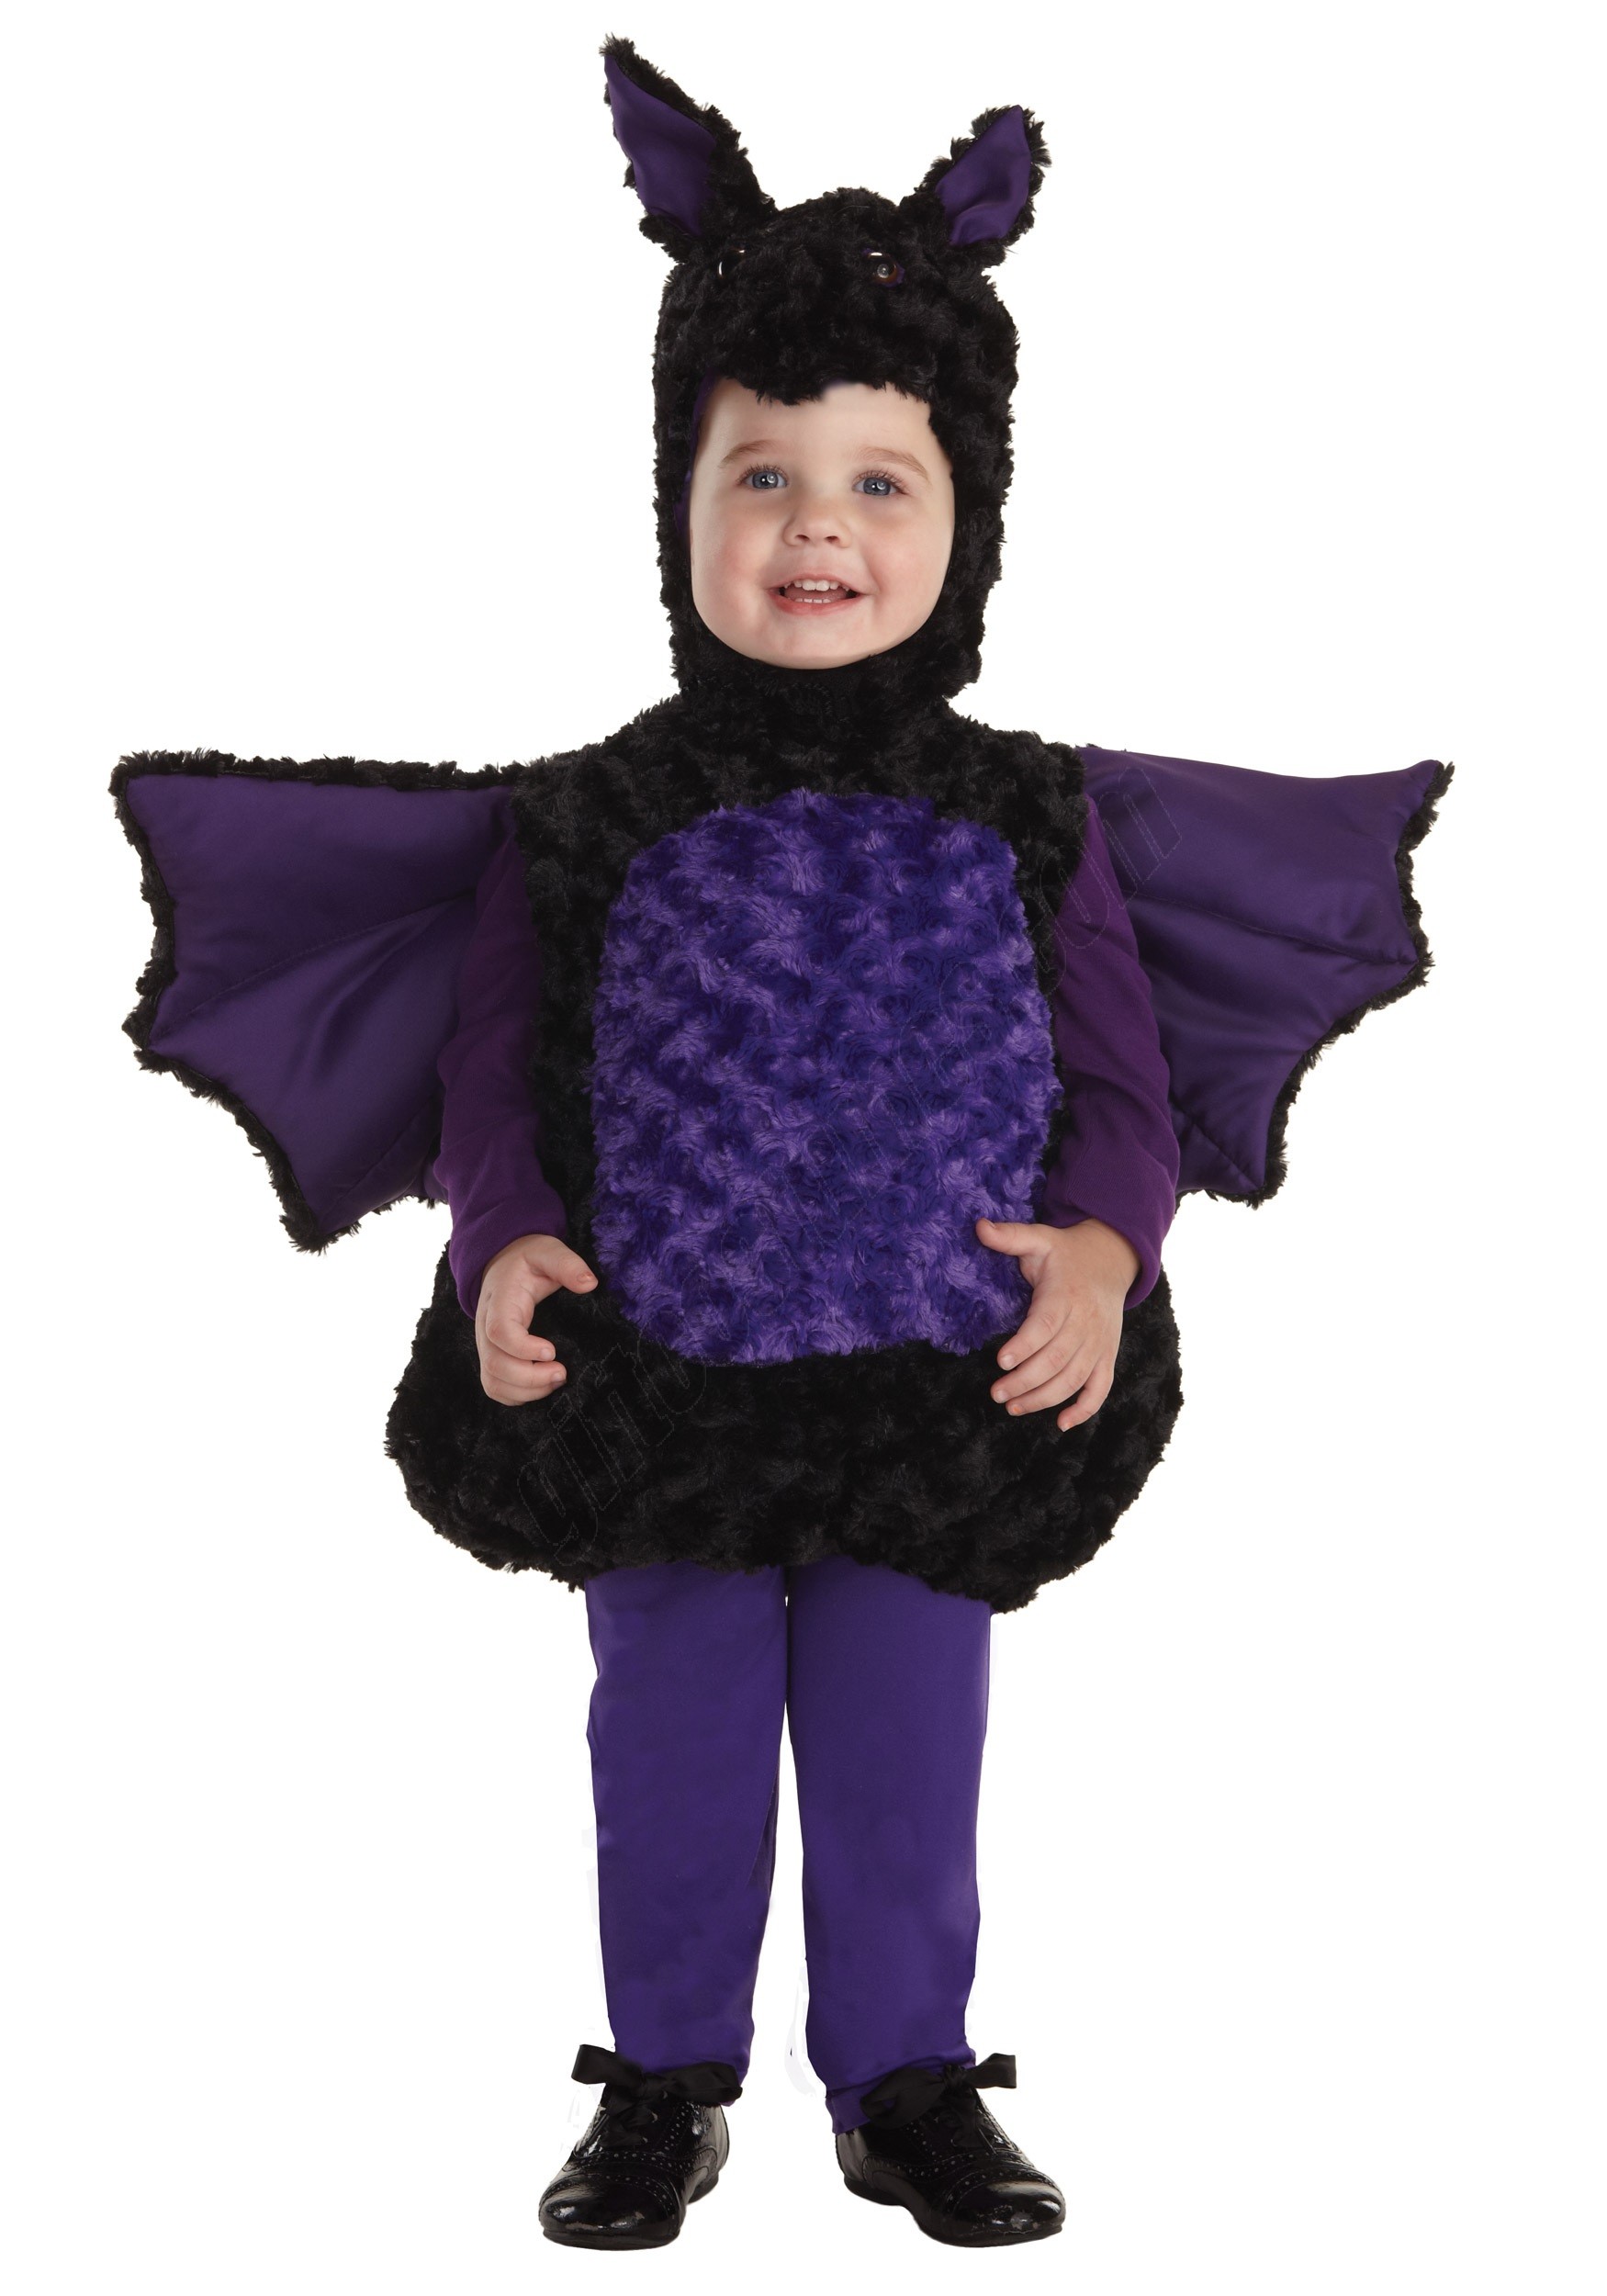 Toddler Bat Costume Promotions - Toddler Bat Costume Promotions